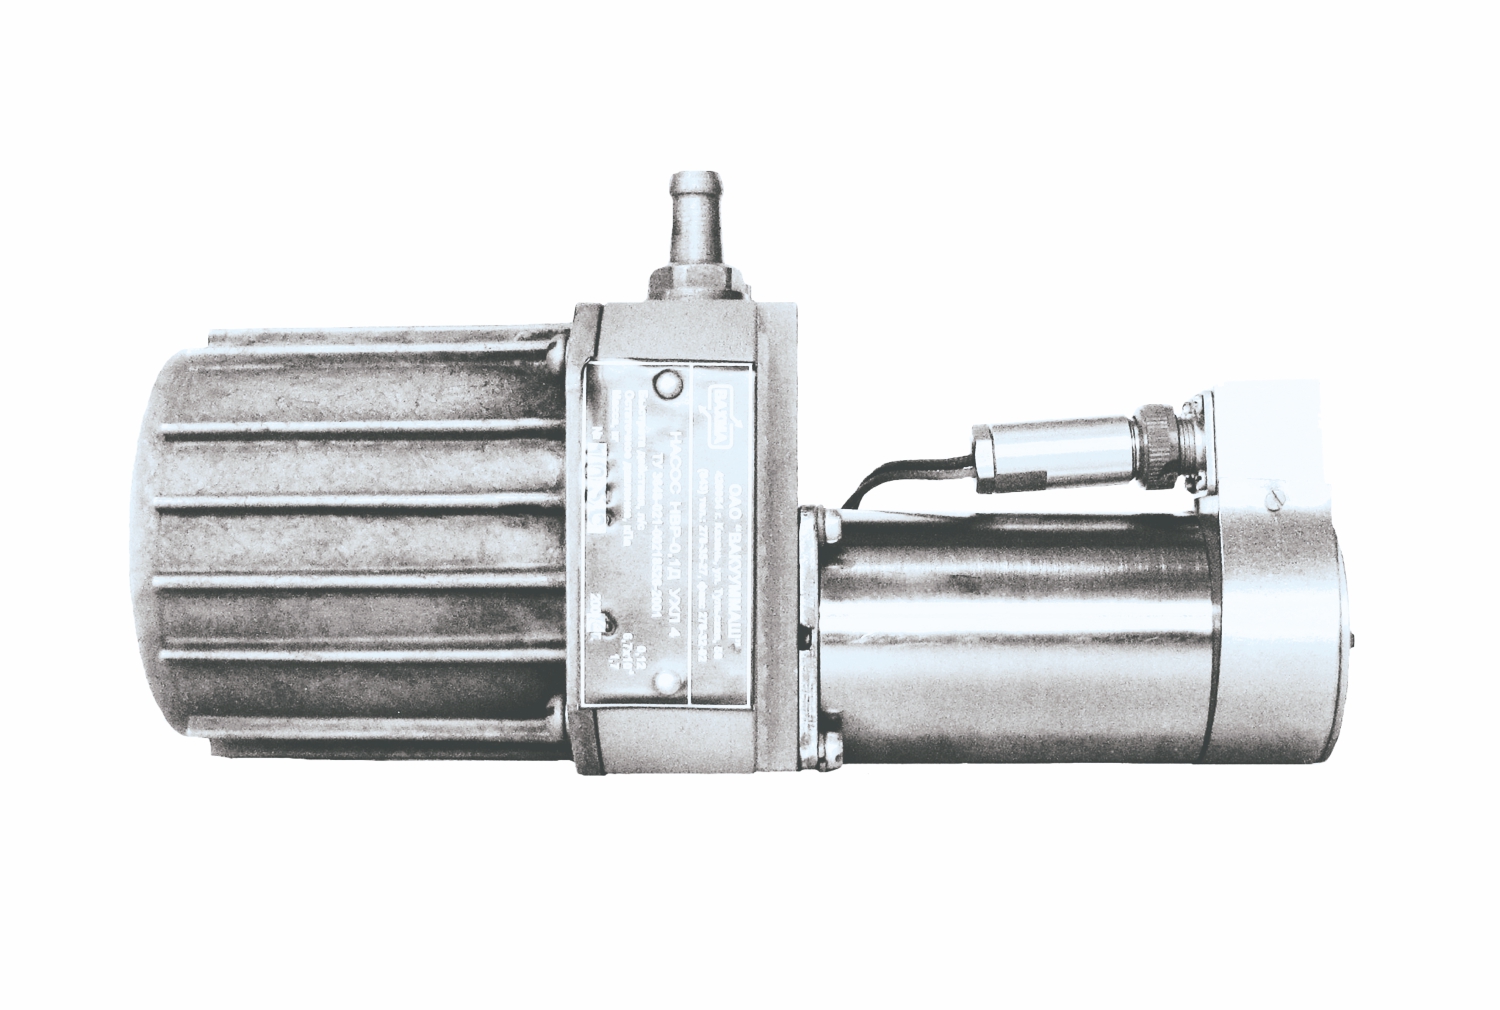 NVR-0,1D Plate-rotary vacuum pump